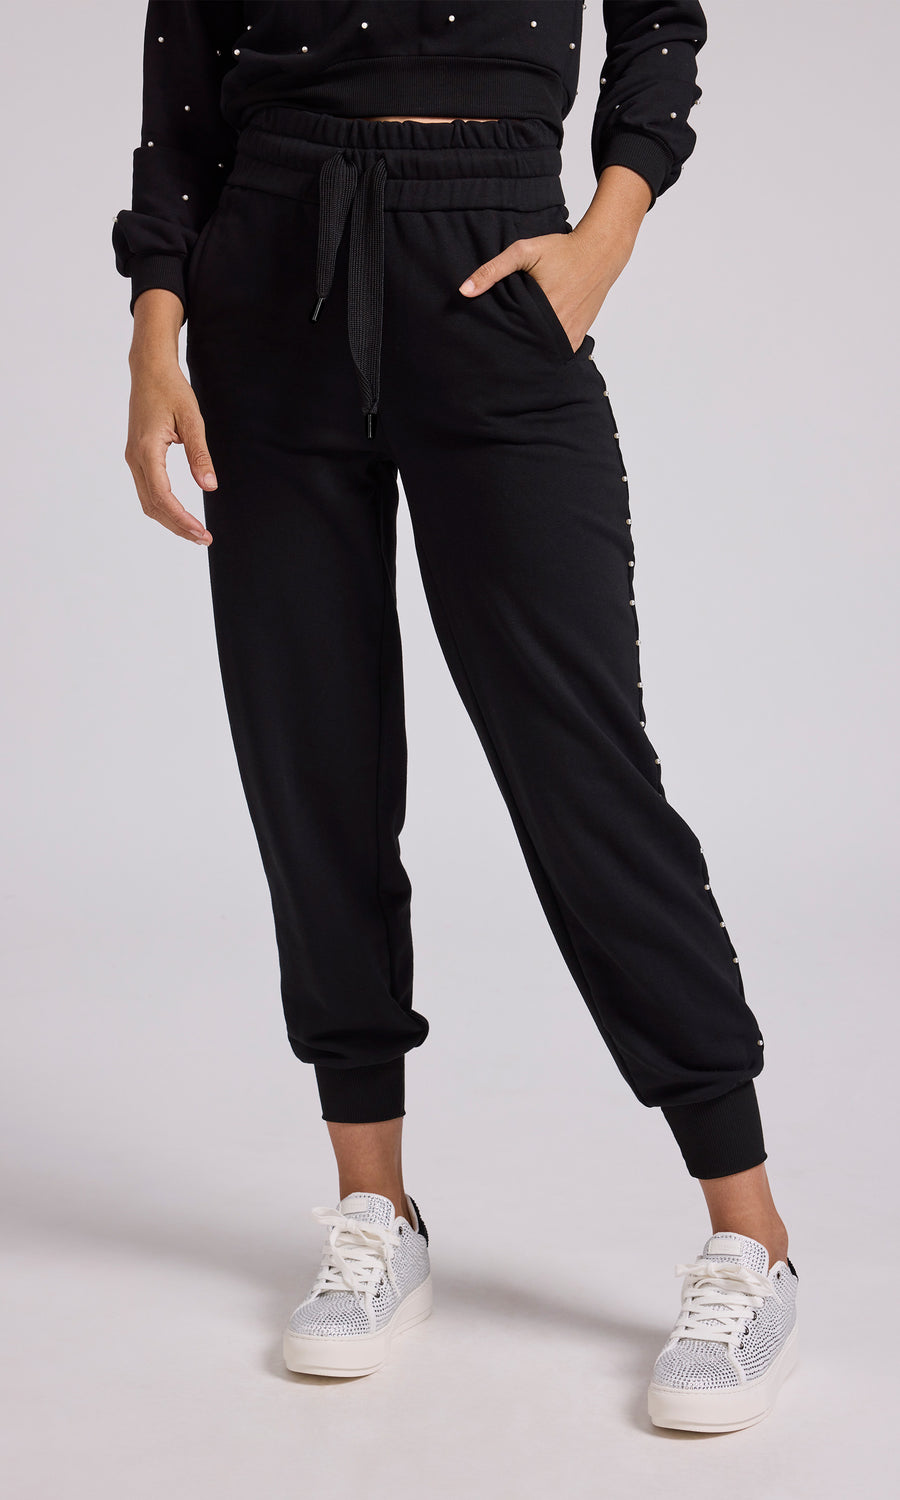 Giada Pearl Sweatpants - Black